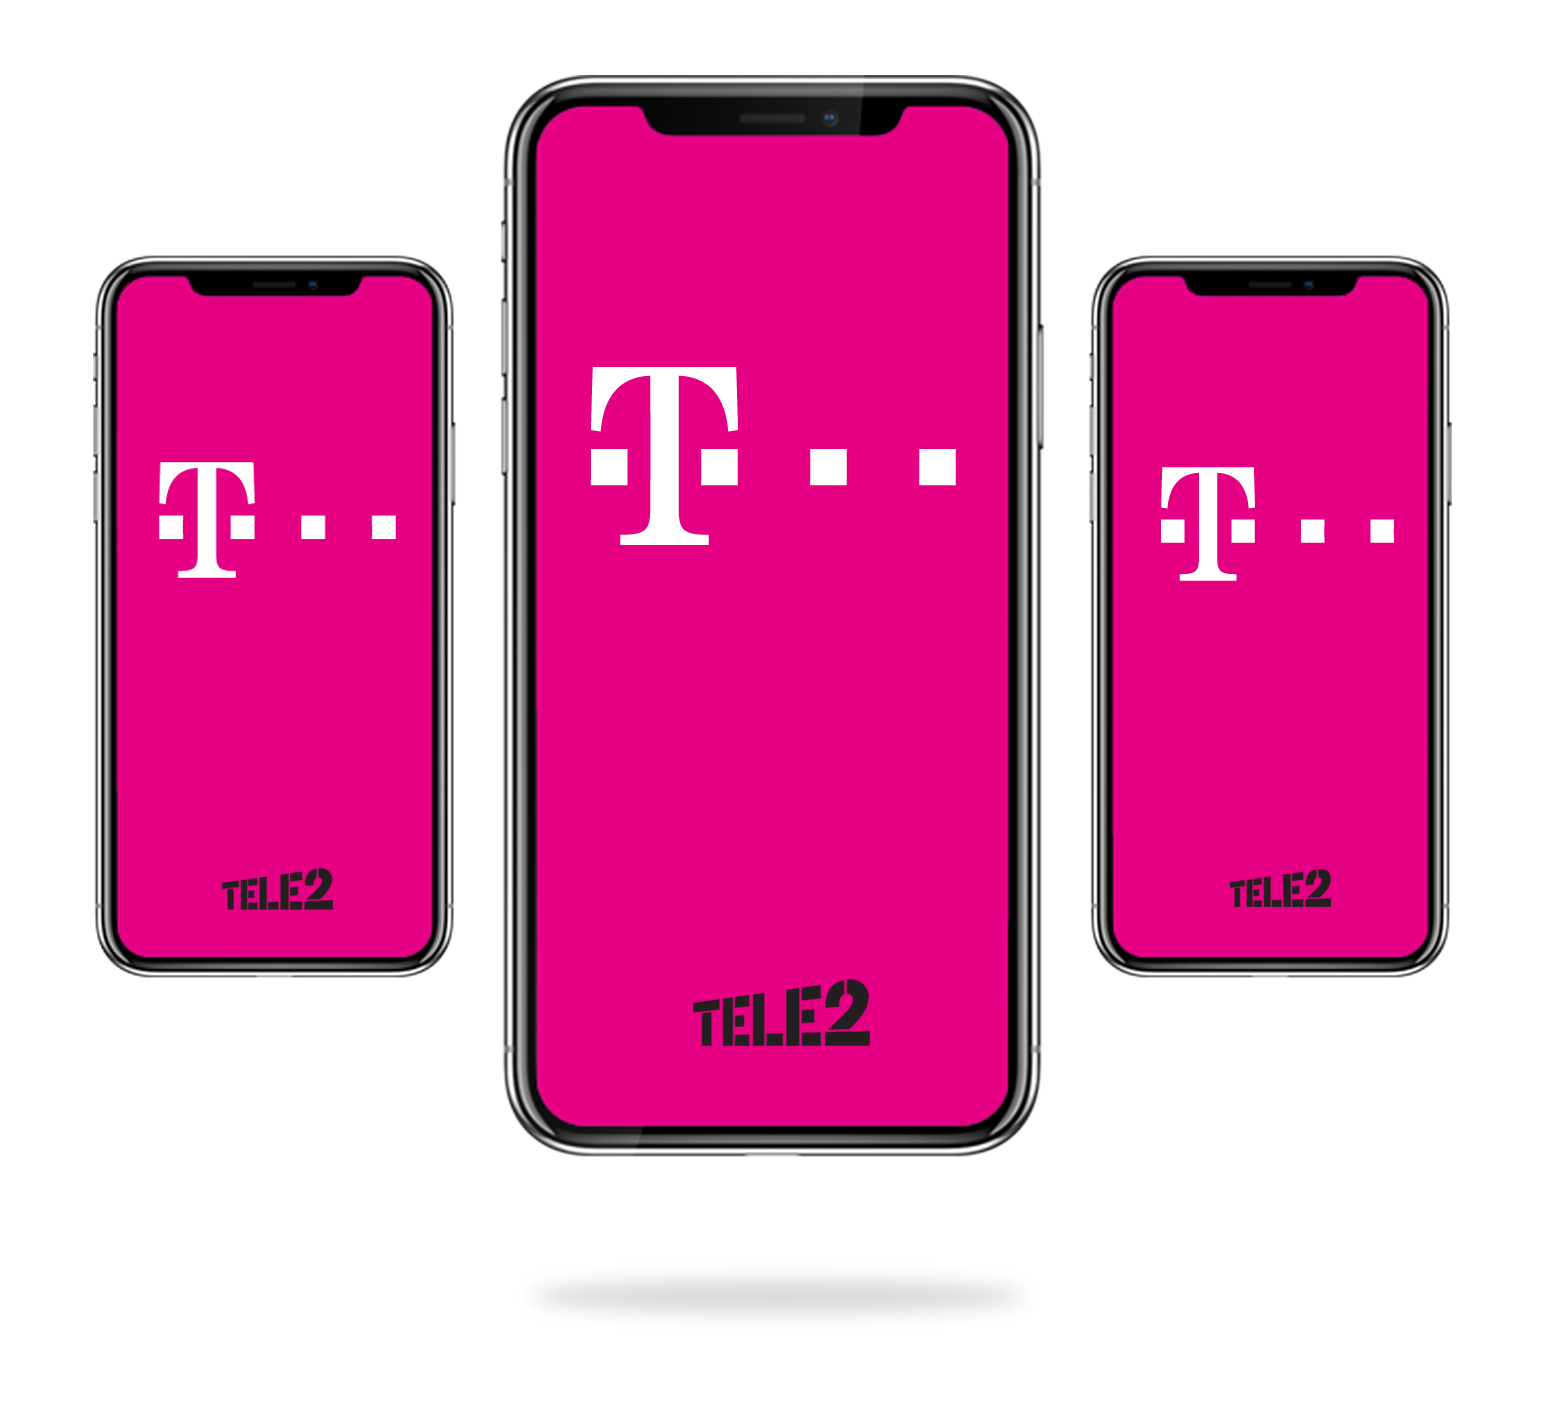 Mobiel en internet bestel je direct bij T-Mobile Ondernemen.